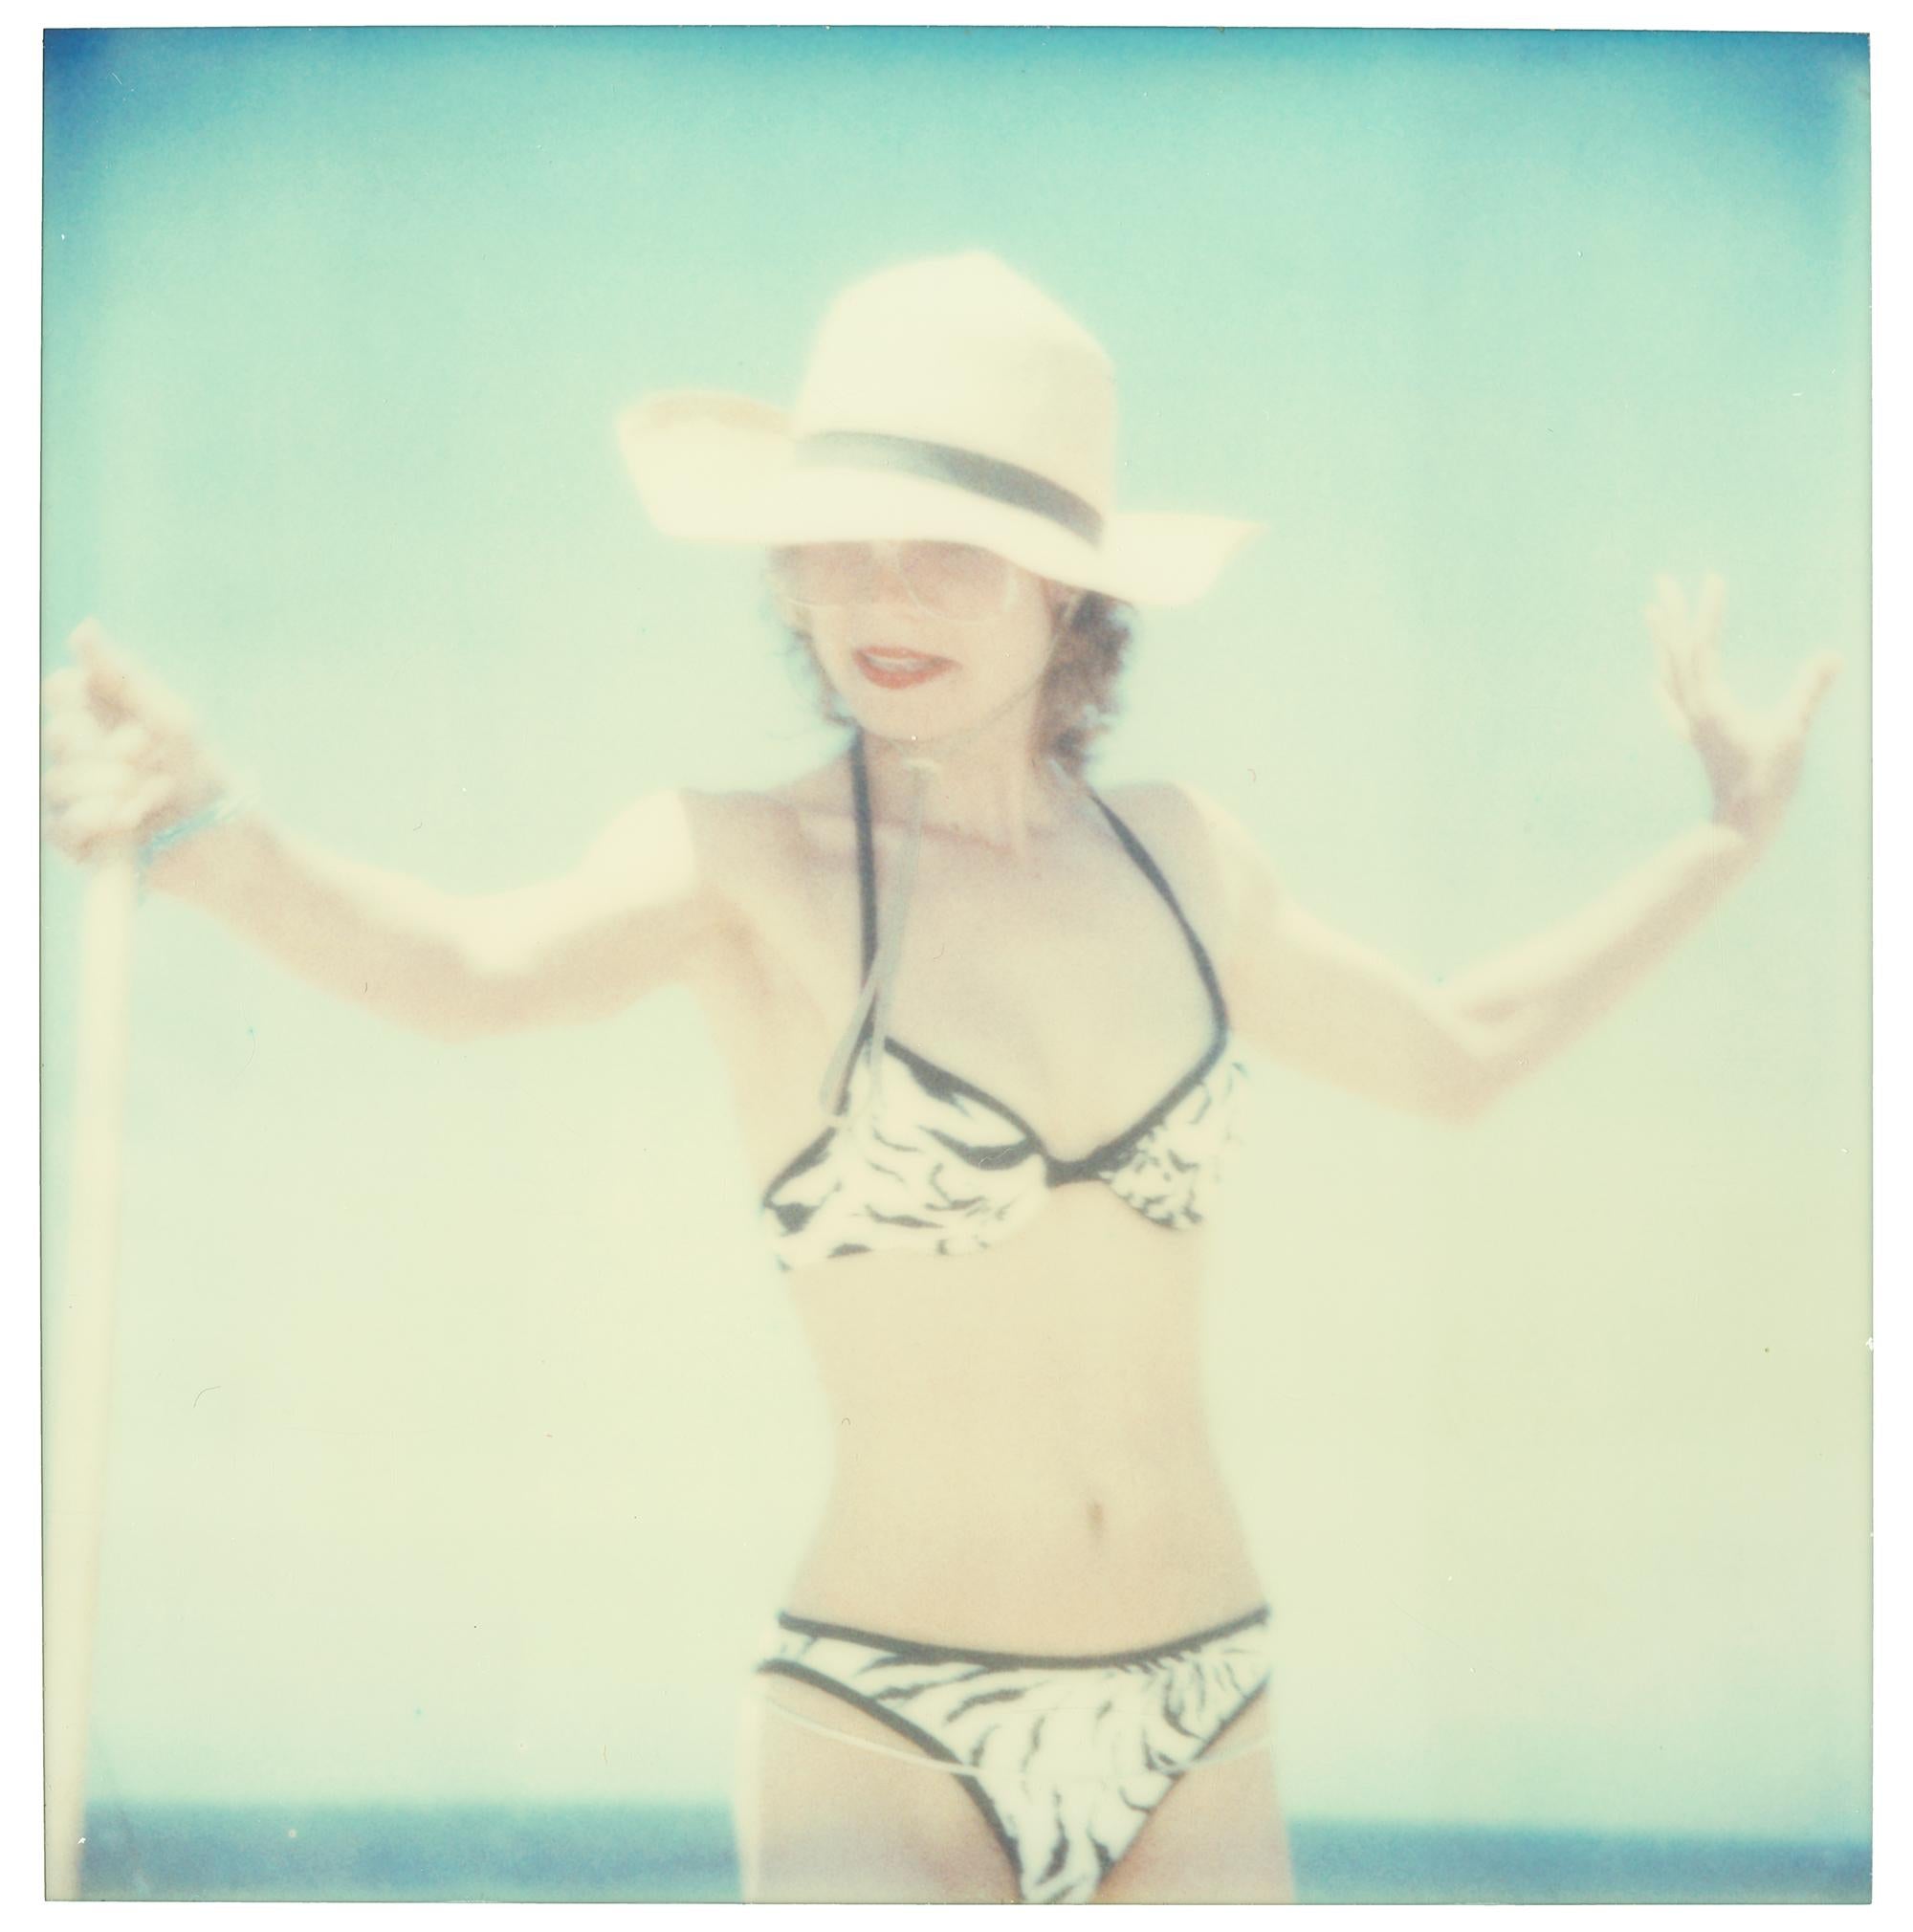 Stefanie Schneider Portrait Photograph - Untitled #04 (Beachshoot) - 21st Century, Contemporary, Polaroid, Women, Color